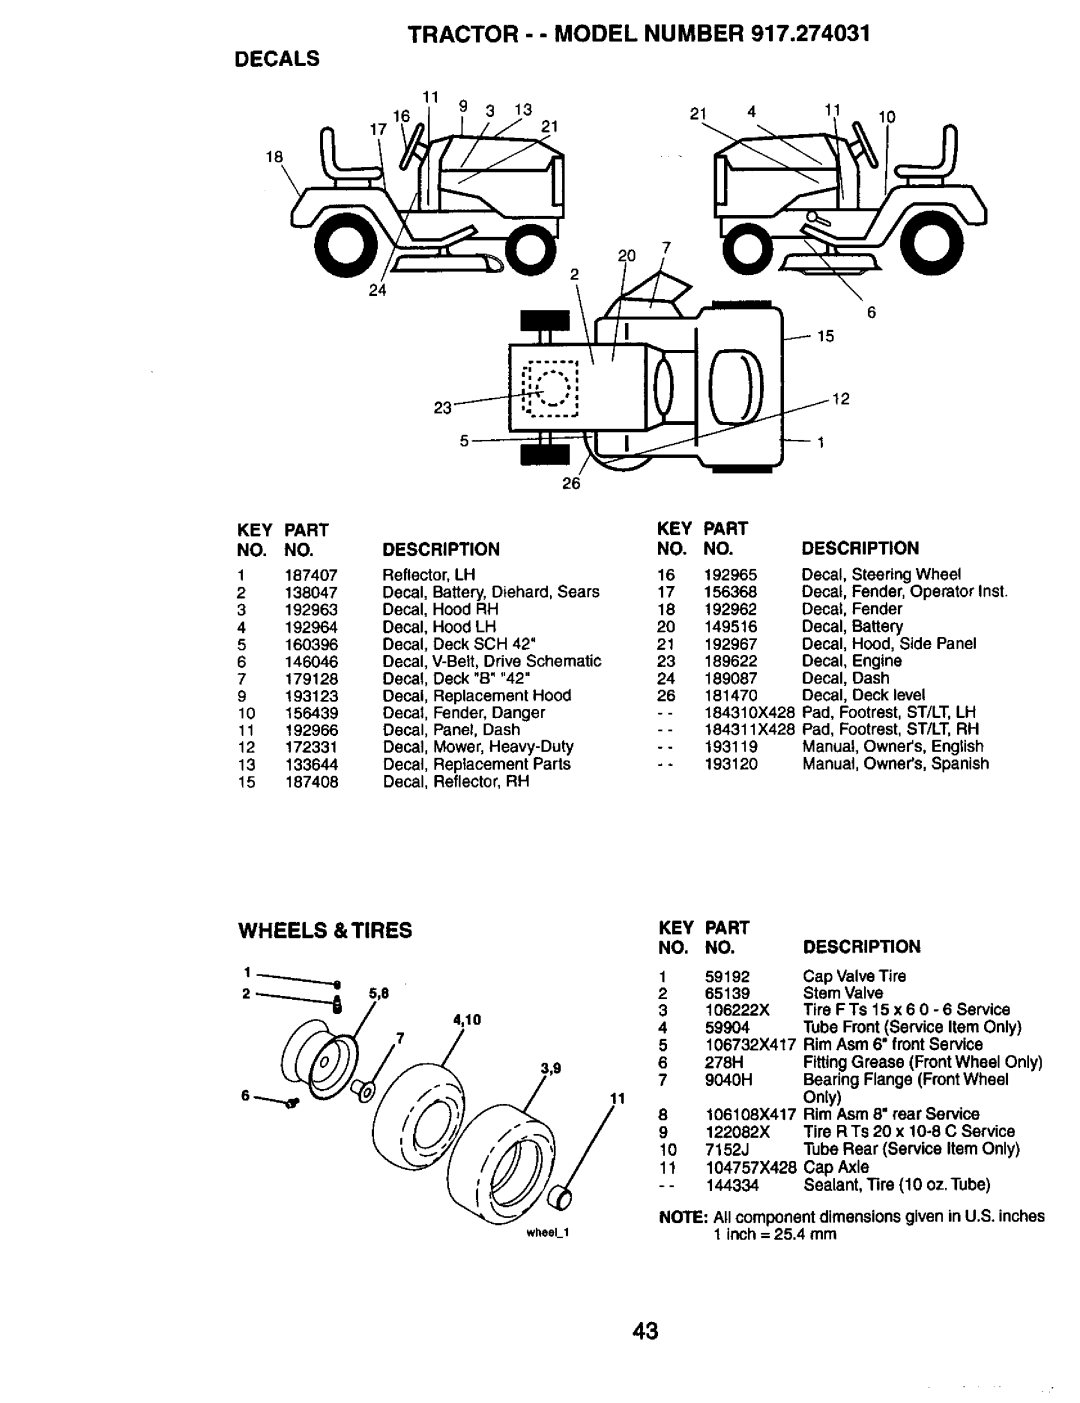 Craftsman 917.274031 owner manual Tractor - Model Number Decals, Wheels &TIRES 